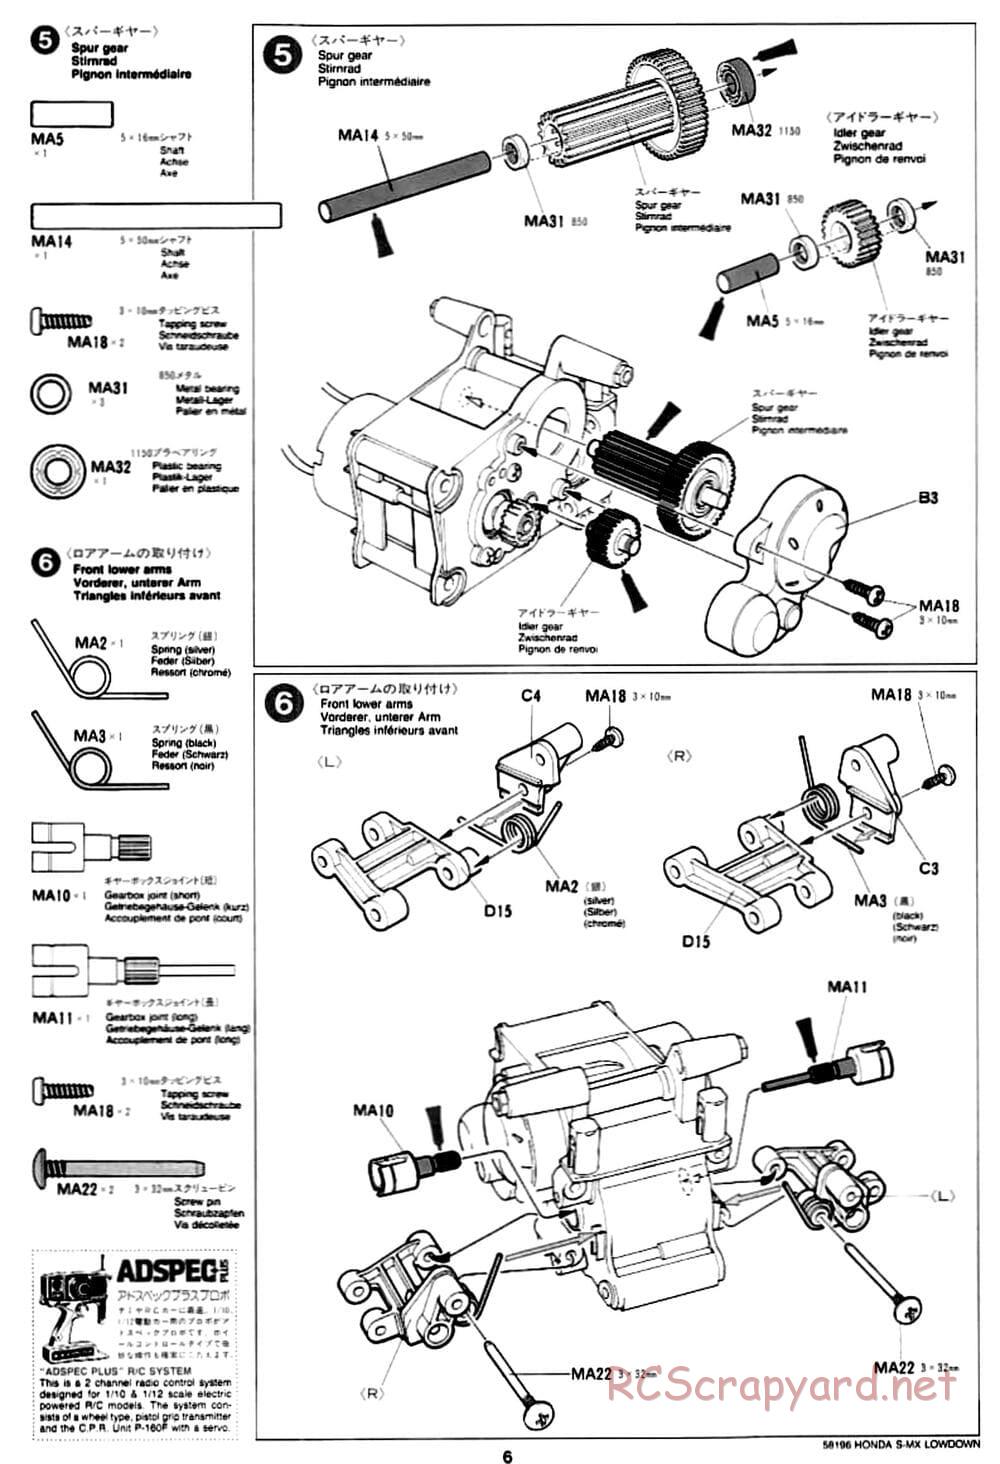 Tamiya - Honda S-MX Lowdown - M01 Chassis - Manual - Page 6